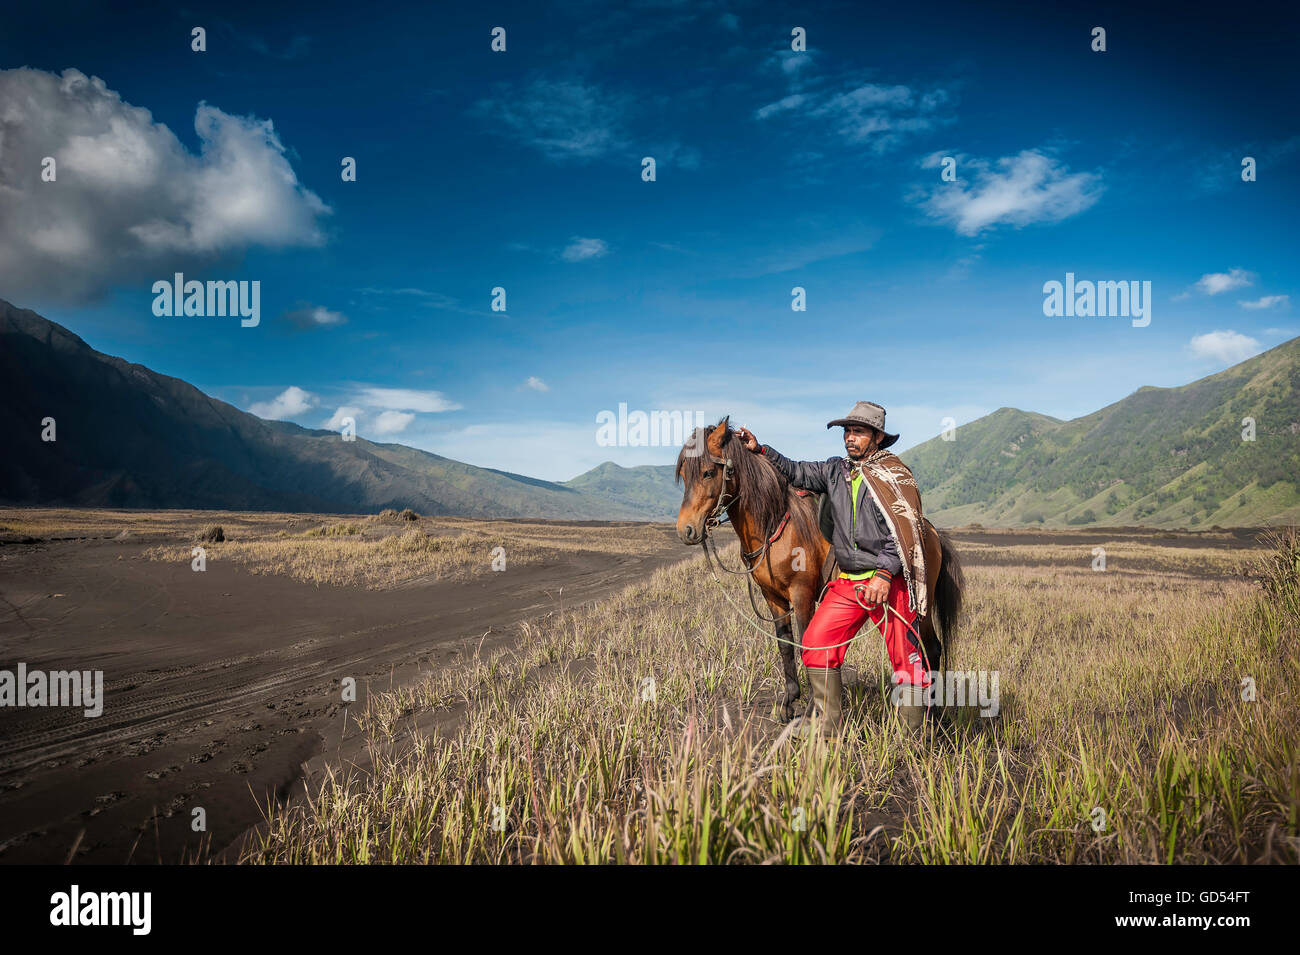 Horse Man in Mount Bromo, Stock Photo